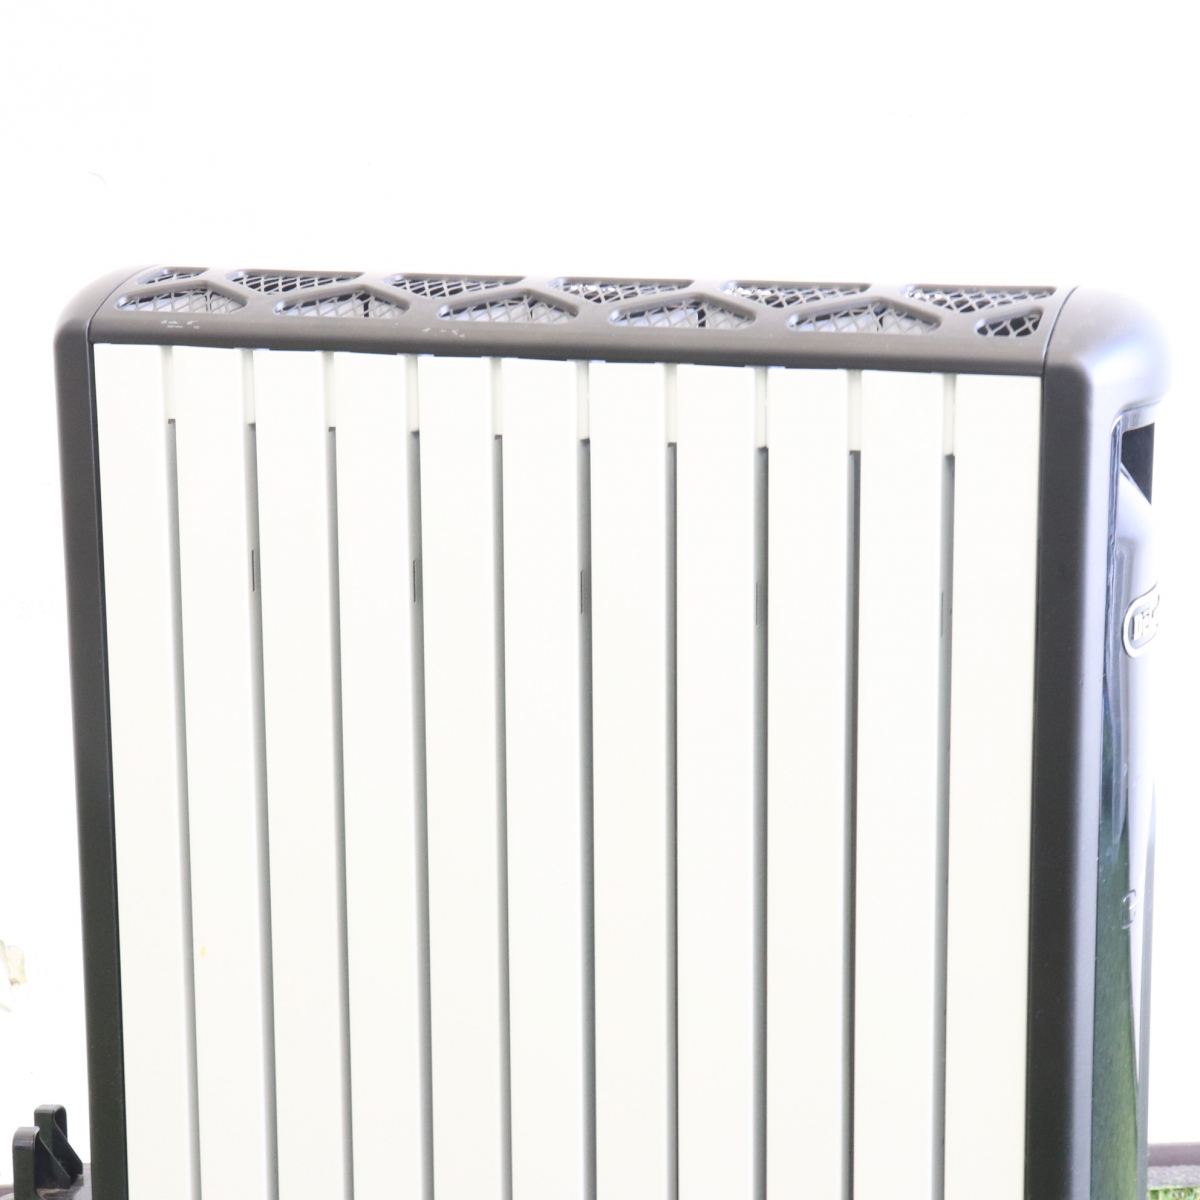 DeLonghi MDH15-BK デロンギ・ジャパン株式会社 マルチダイナミックヒーター 暖房器具 自動温度調整機能 冬物 電気 025FCMR02_画像4